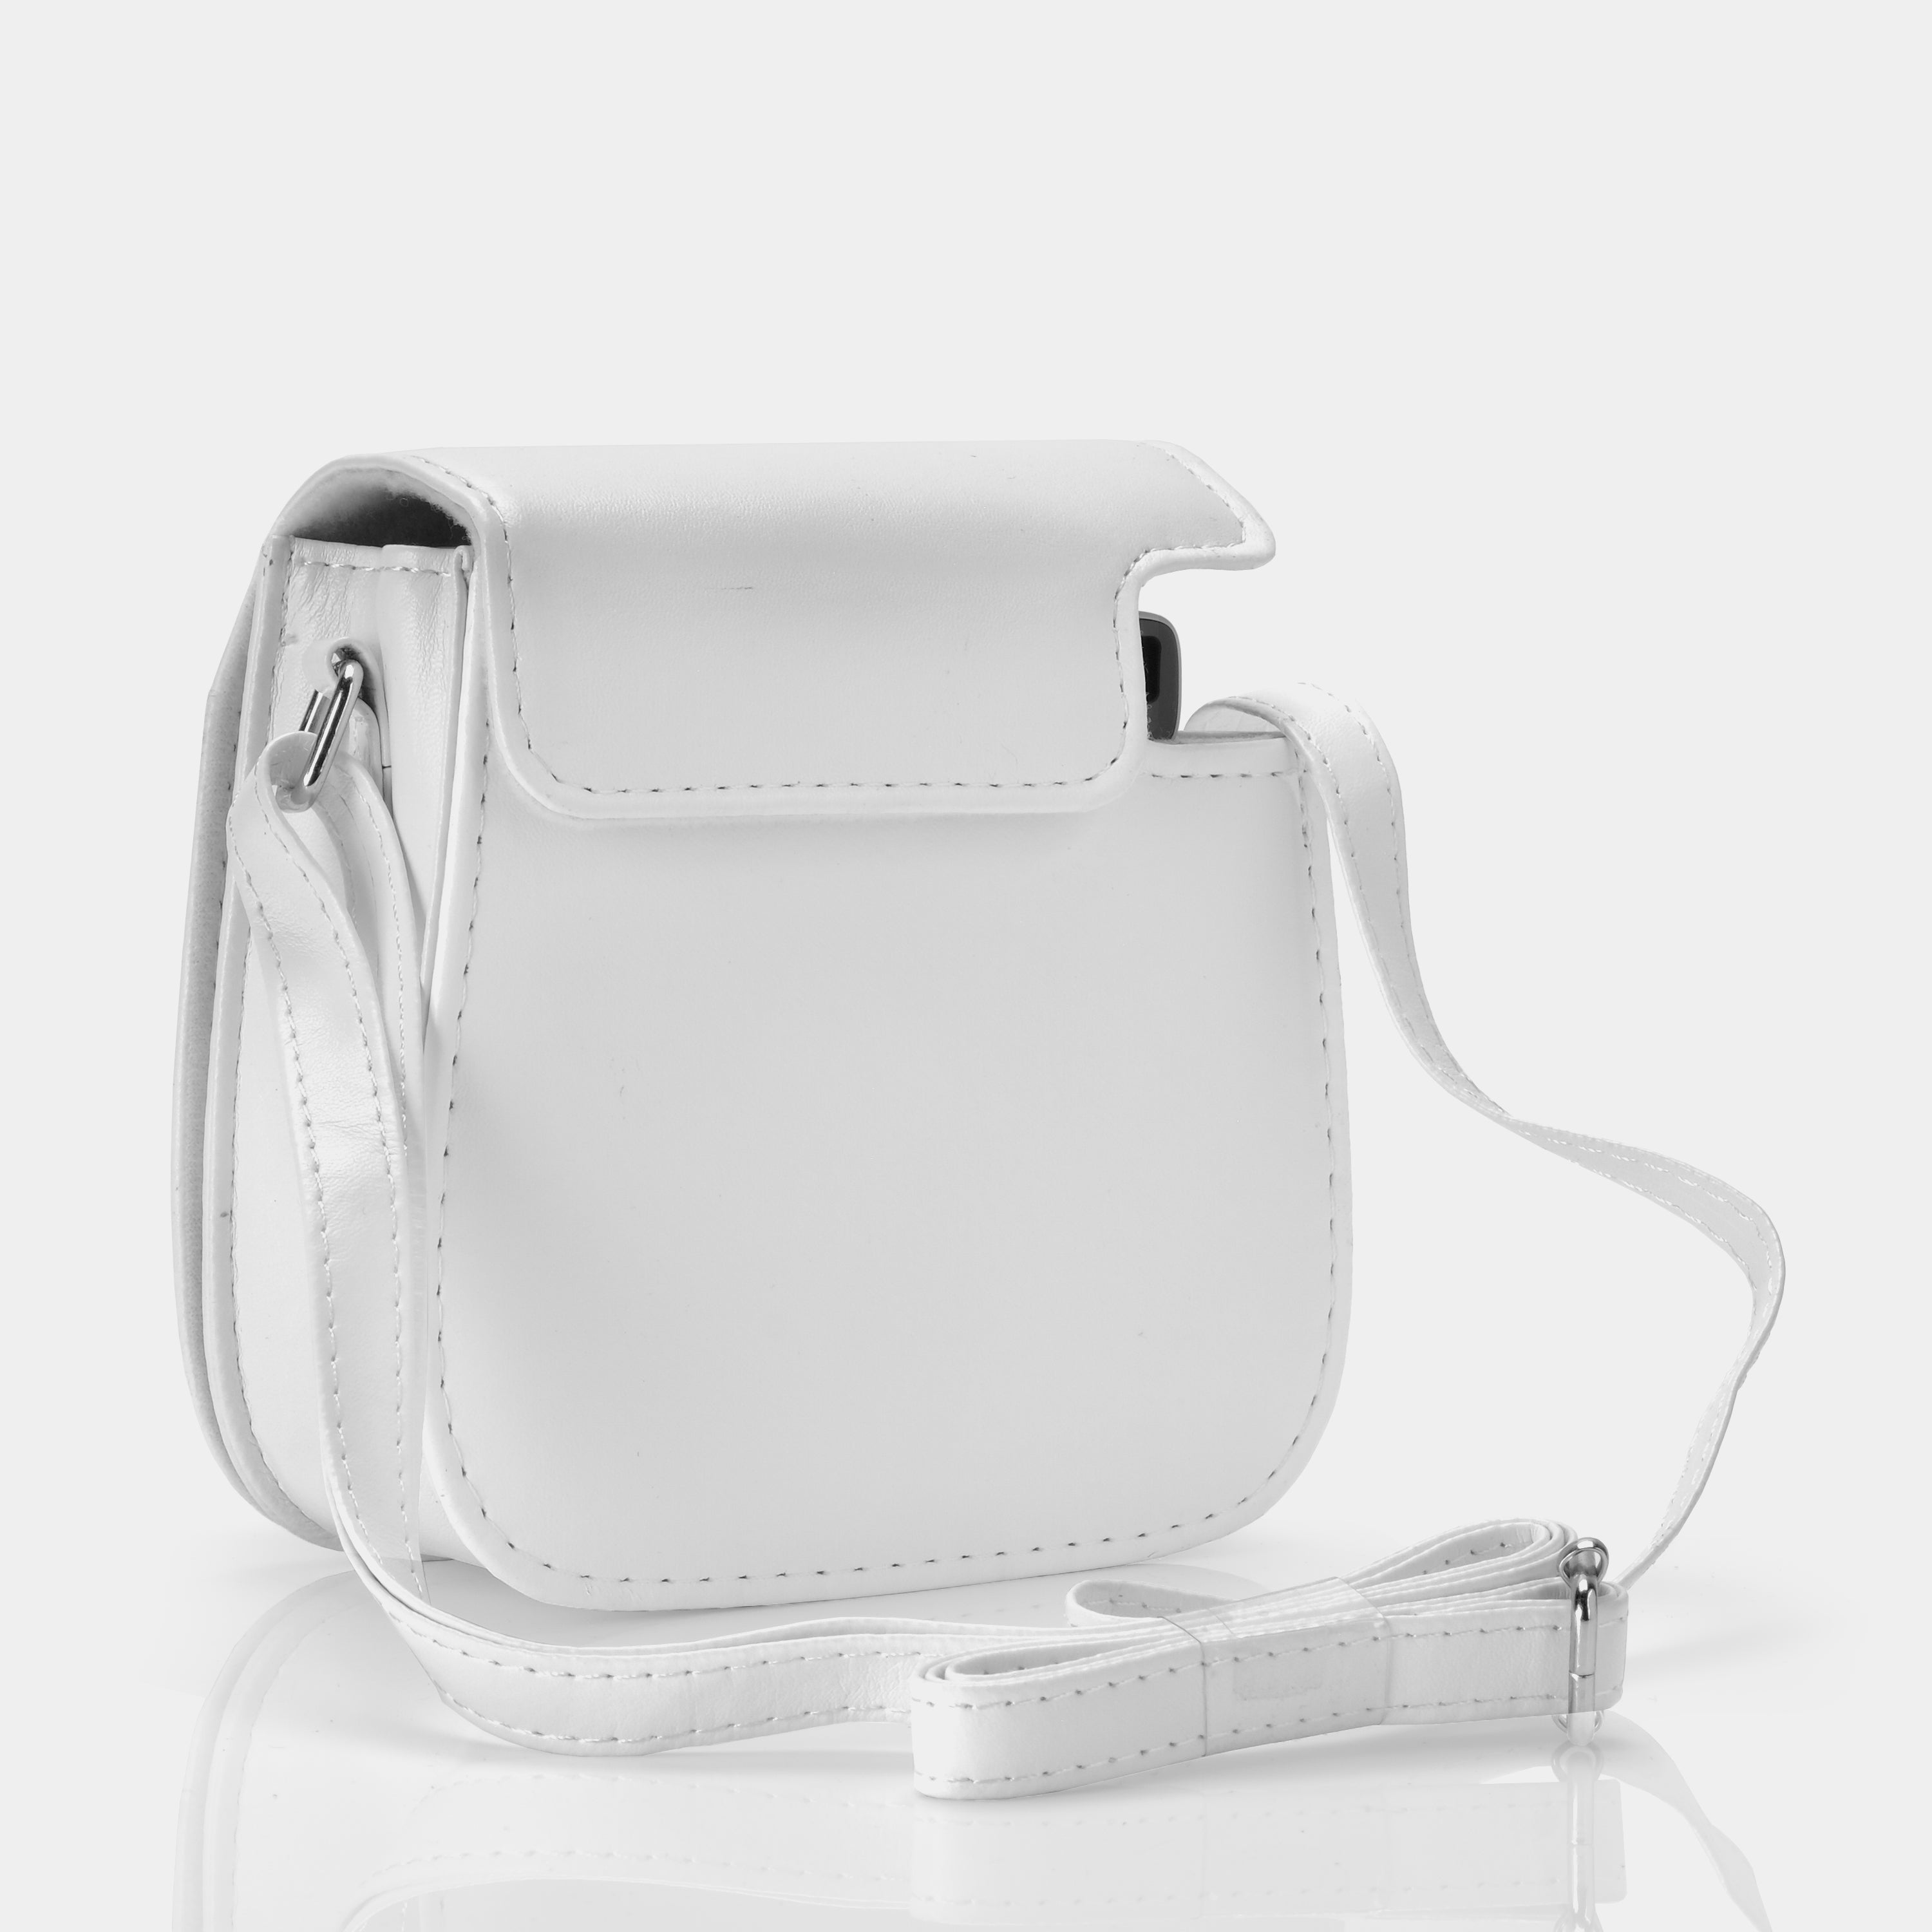 Fujifilm Instax Mini 9 Teal Instant Film Camera With White Bag - Refurbished